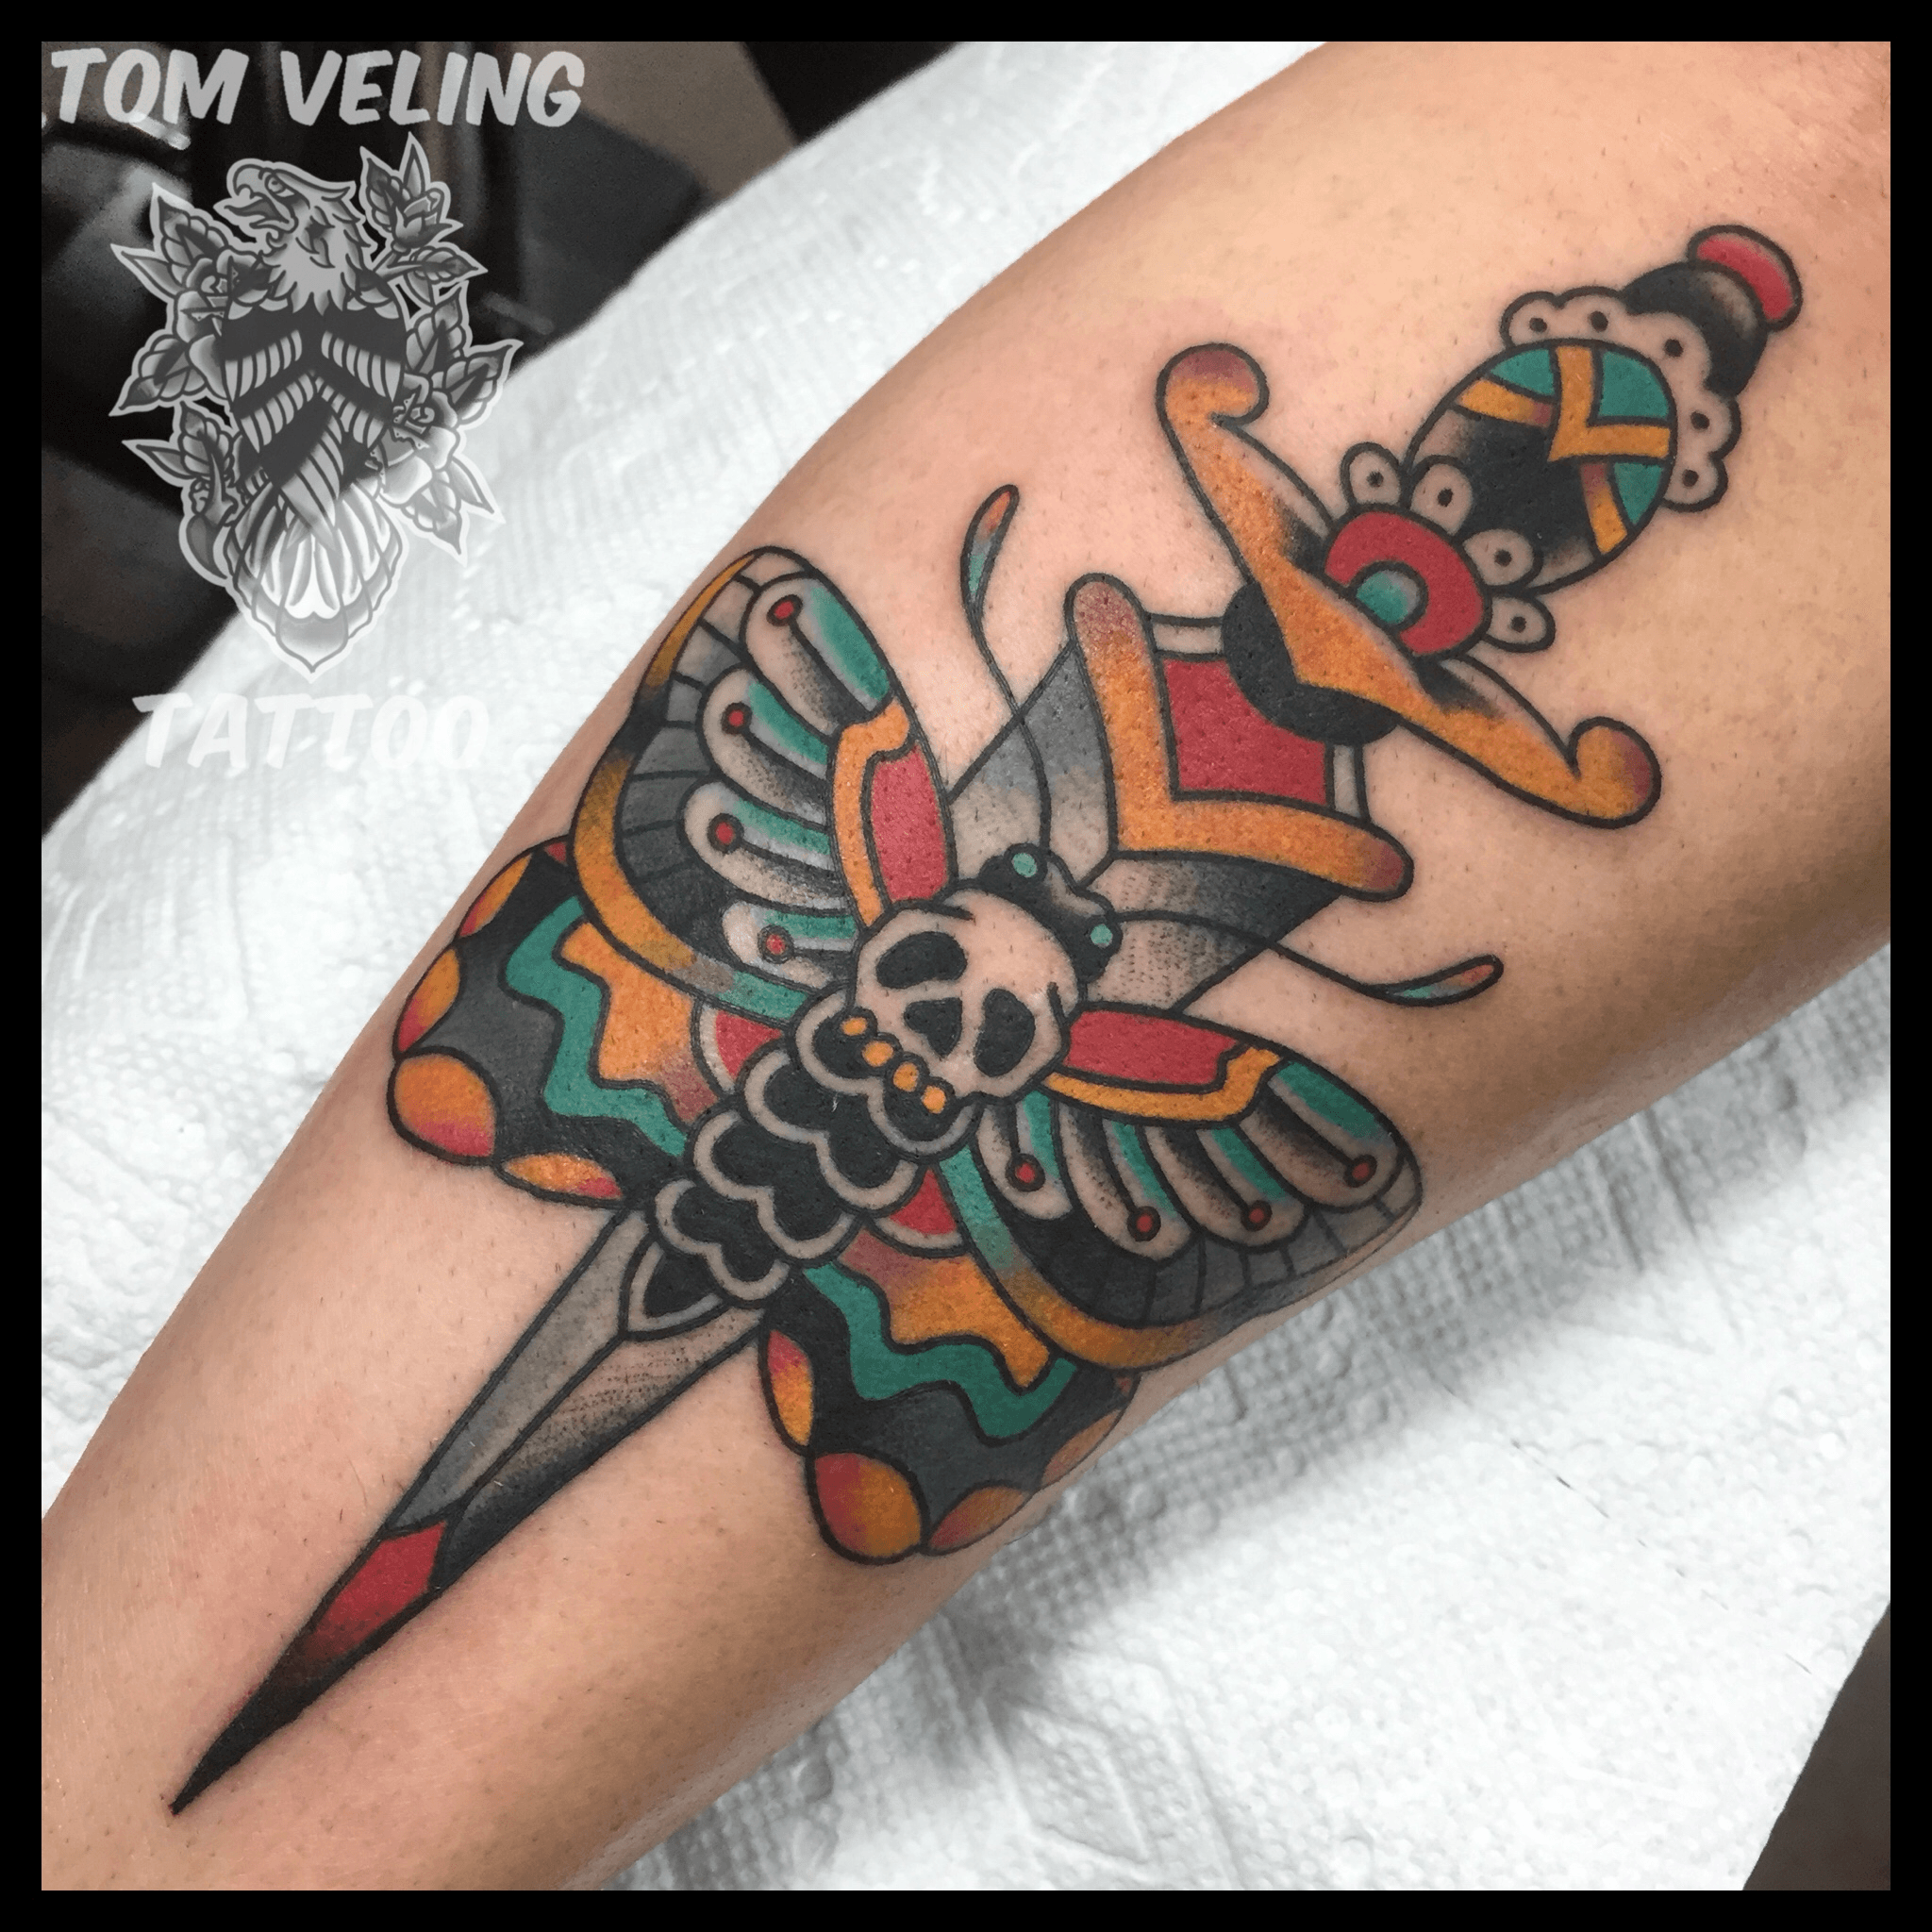 Tattoo uploaded by Tom Veling • #portsidetattoo #portsidetattoosd #americantraditional #radtrad #traditionaltattoo #traditional #sandiego #deathmoth #moth #dagger #skull • Tattoodo